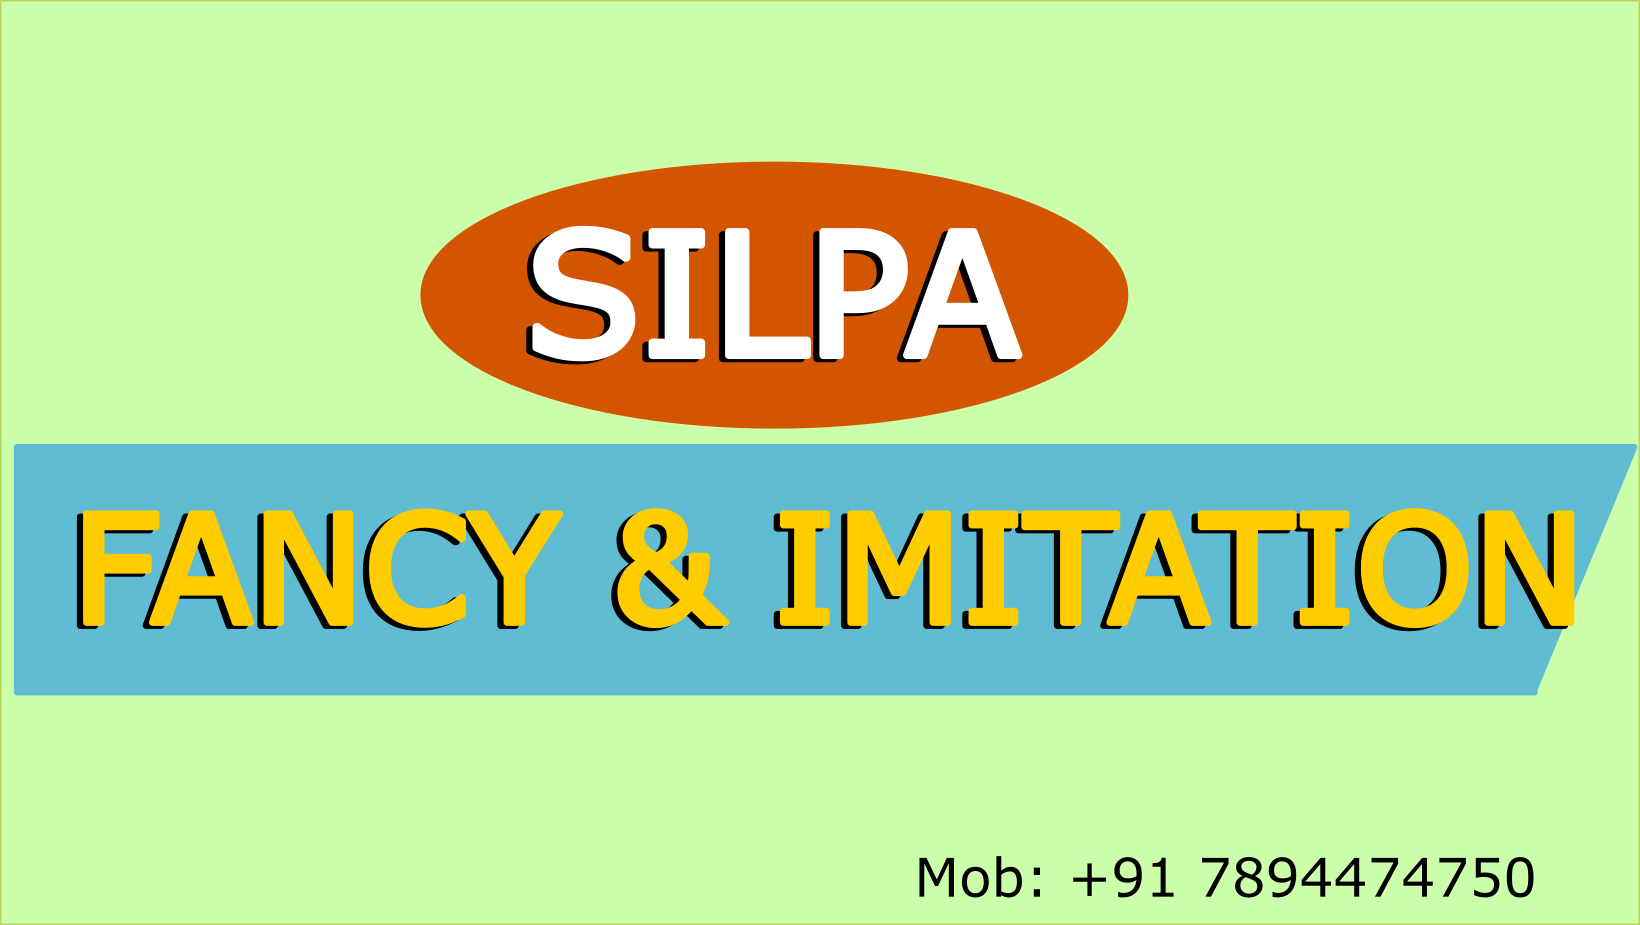 Silpa Fancy & Imitation  shop